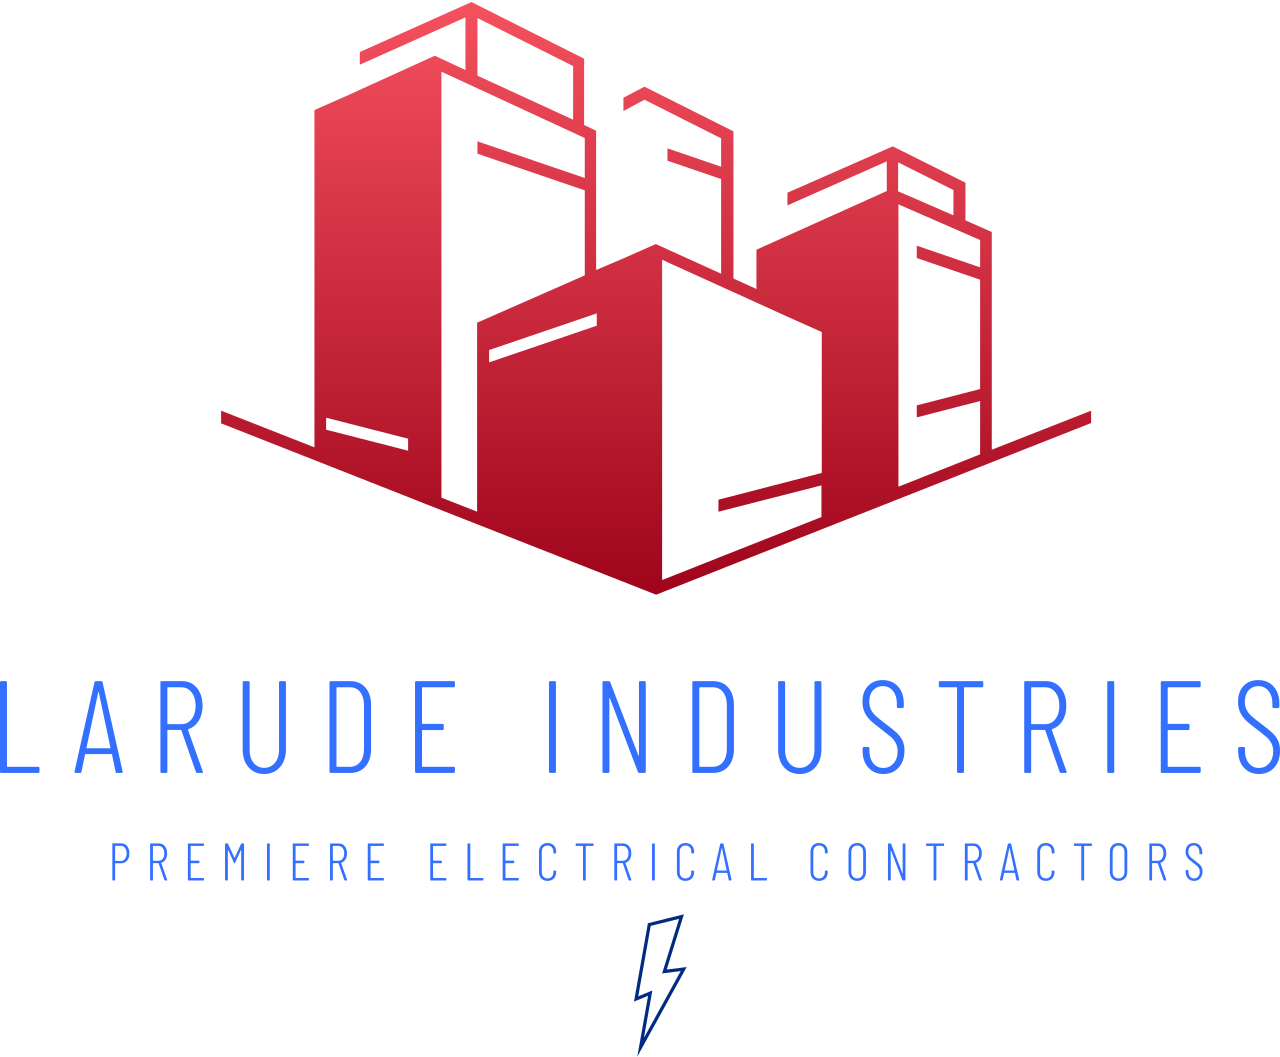 Larude Industries's logo